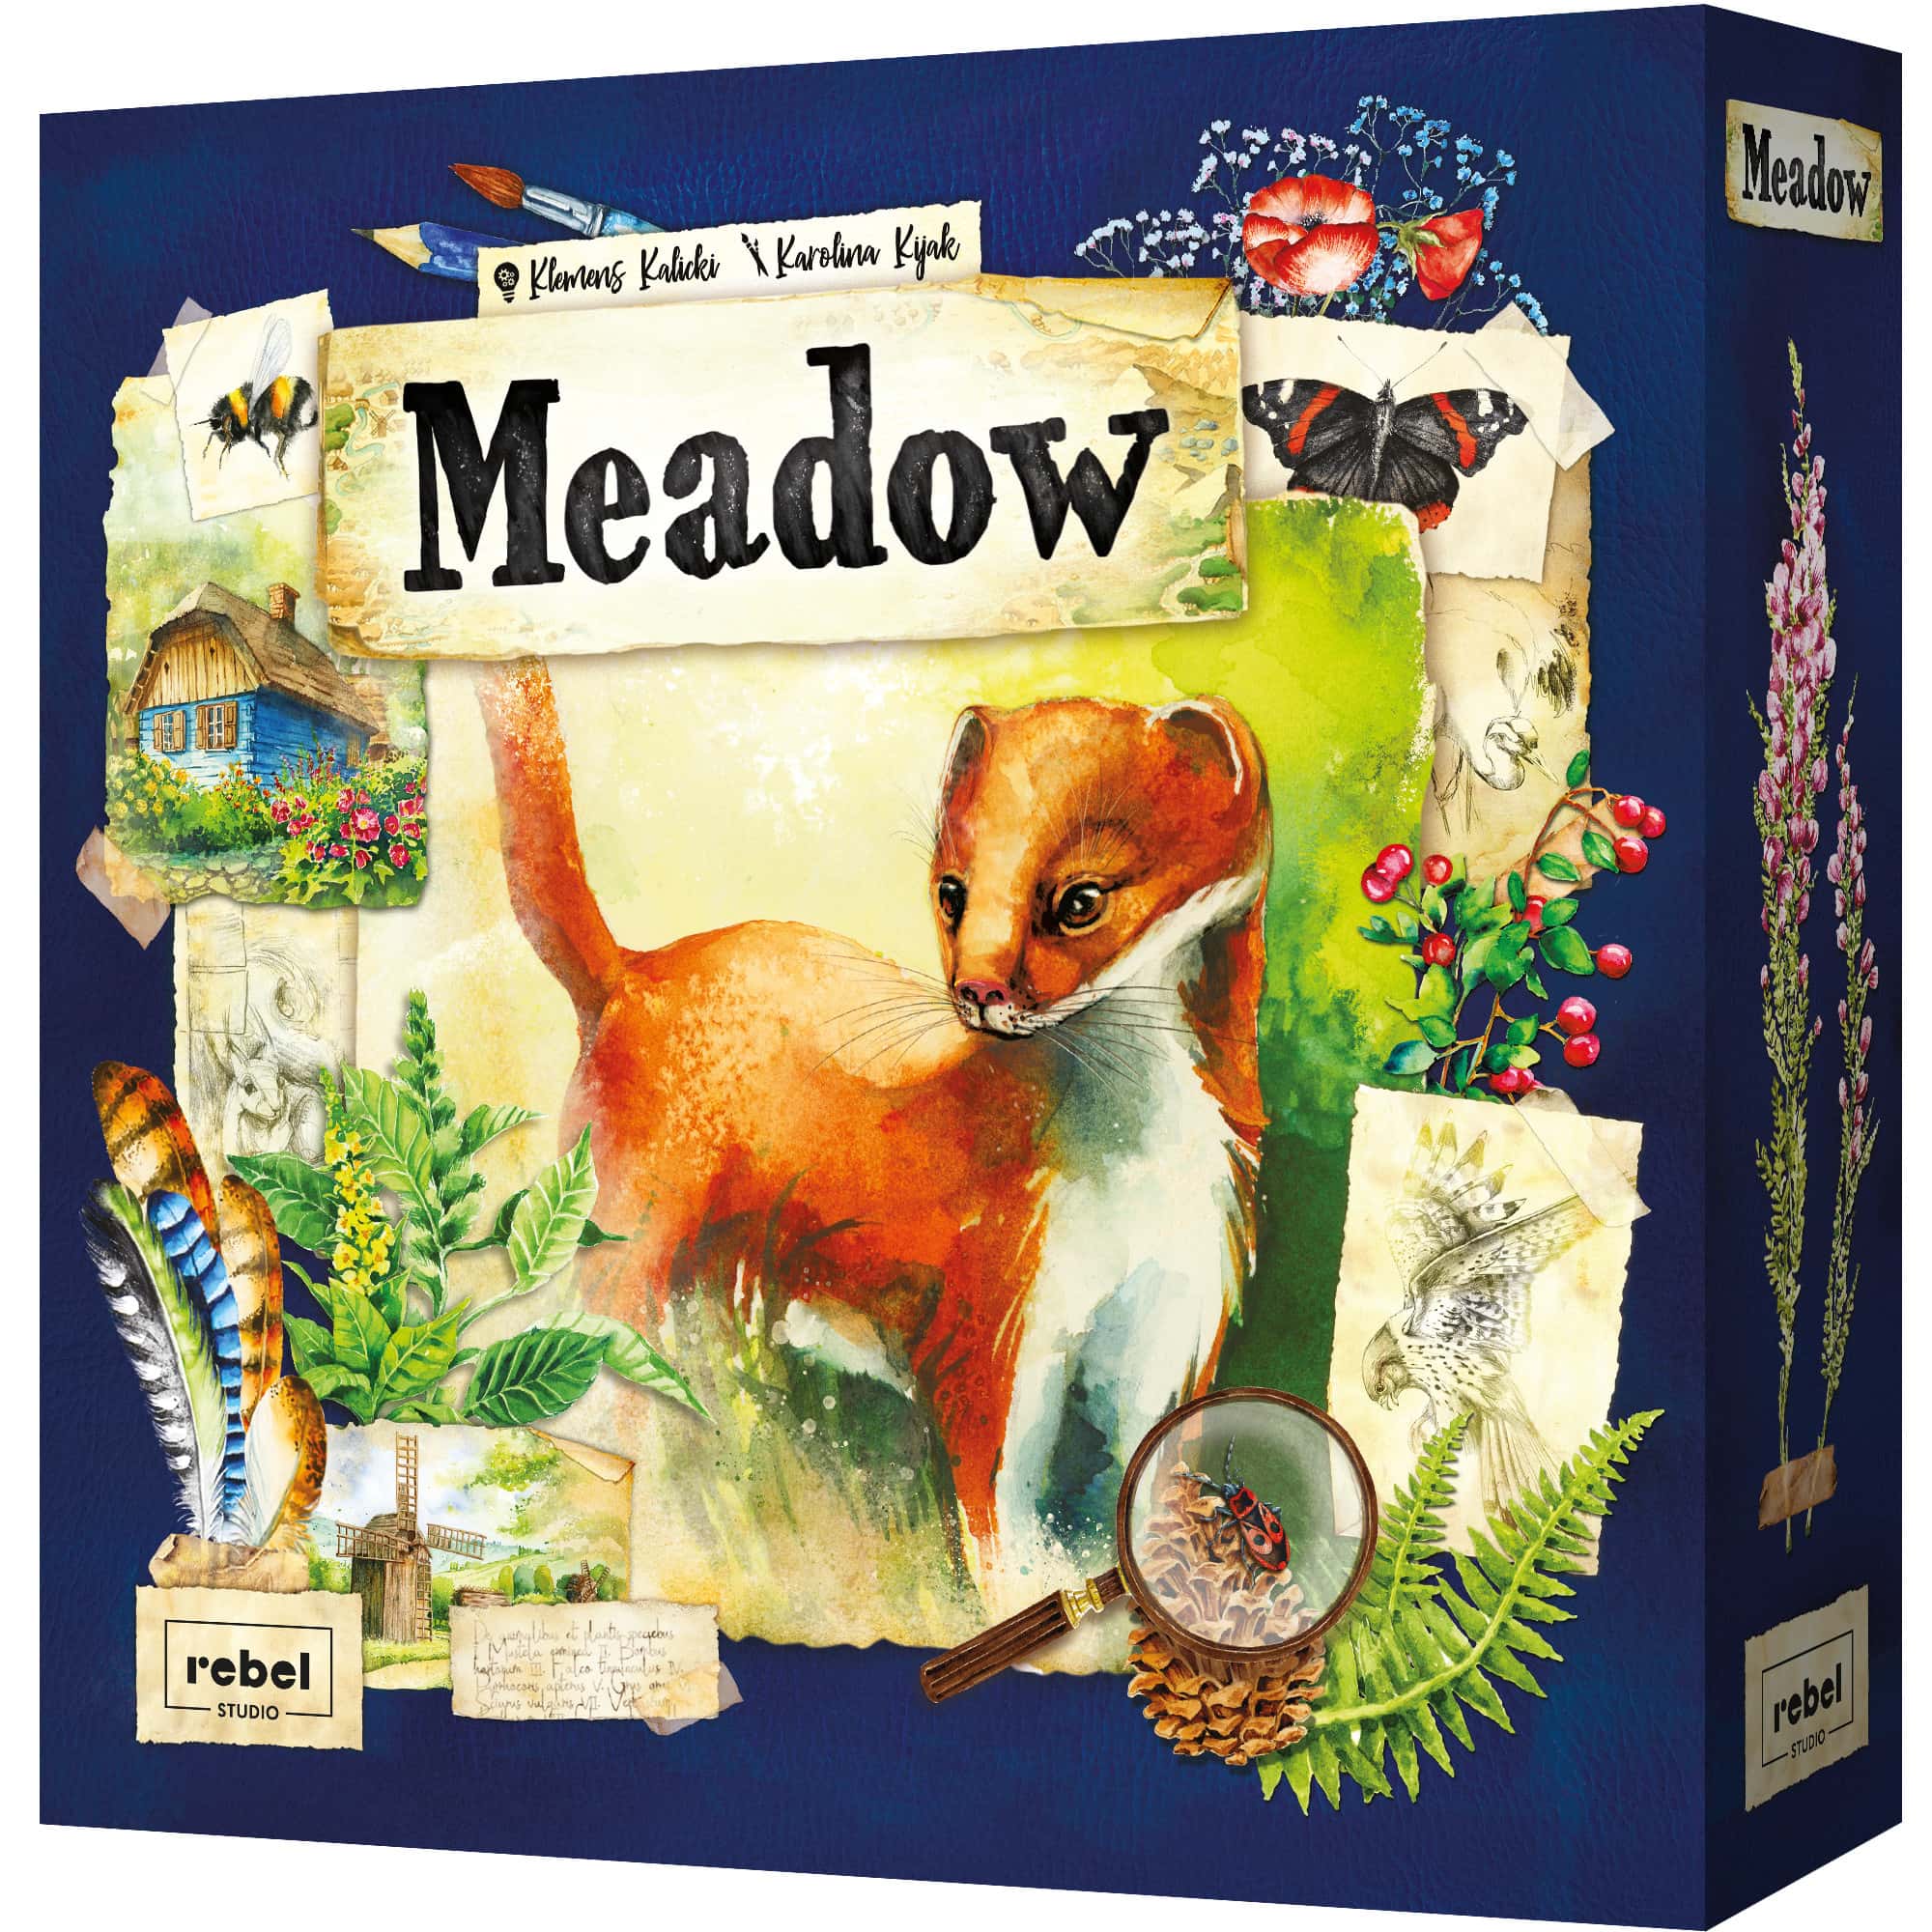 Meadow jeu